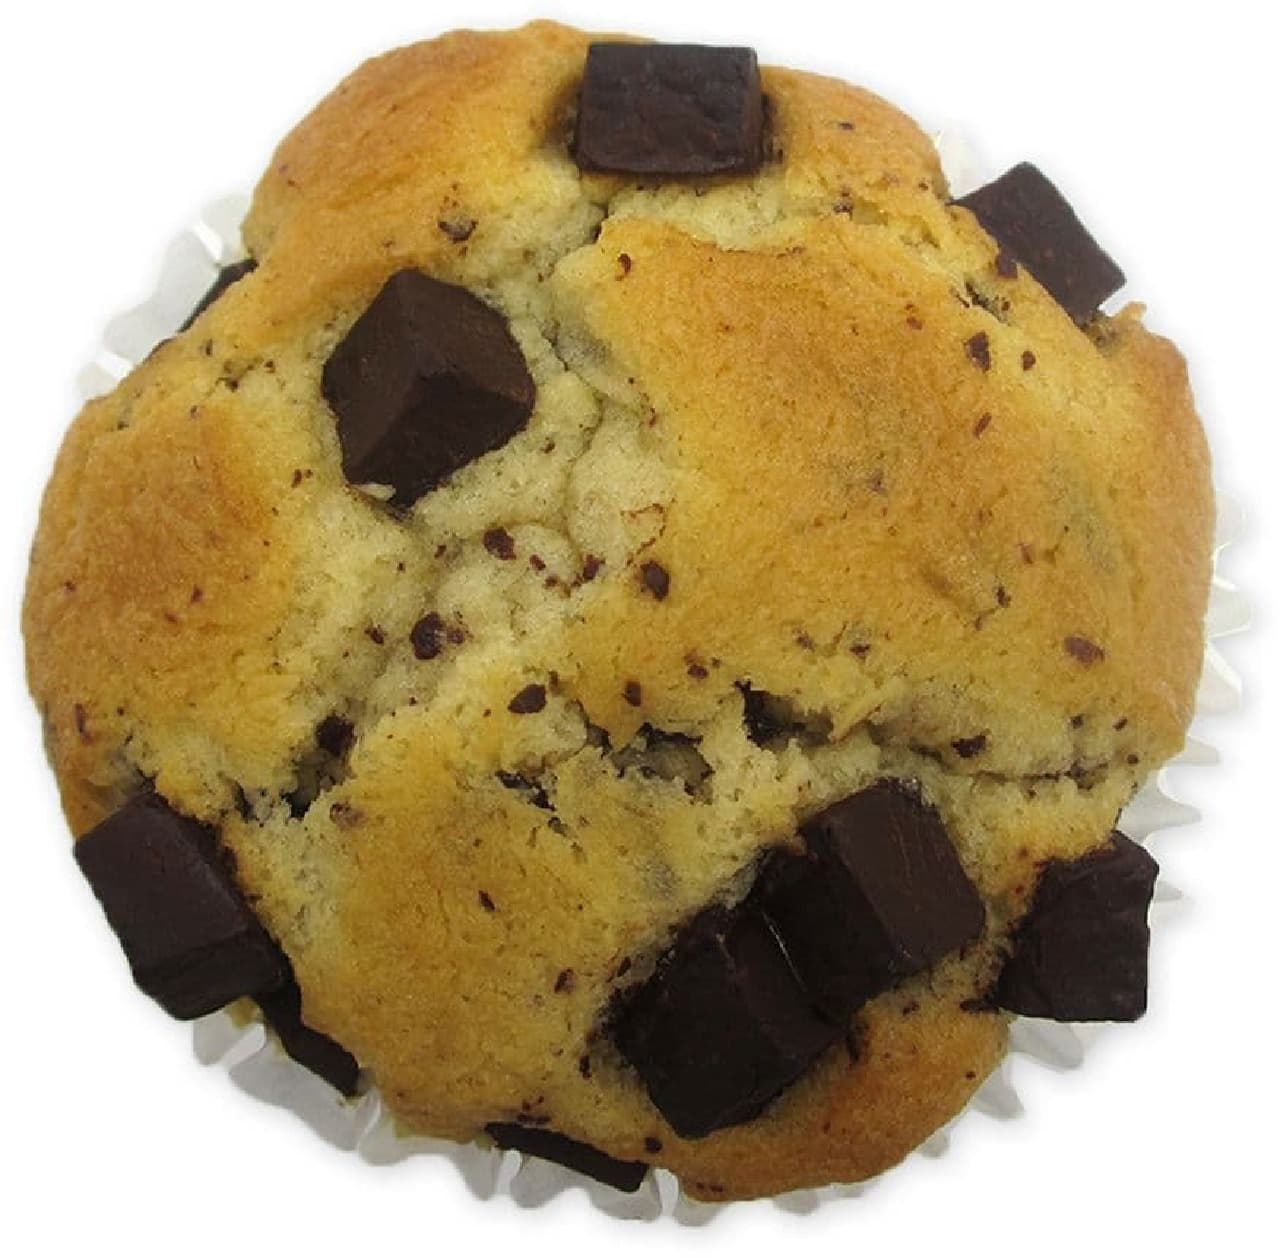 7-ELEVEN "rich chocolate muffin"